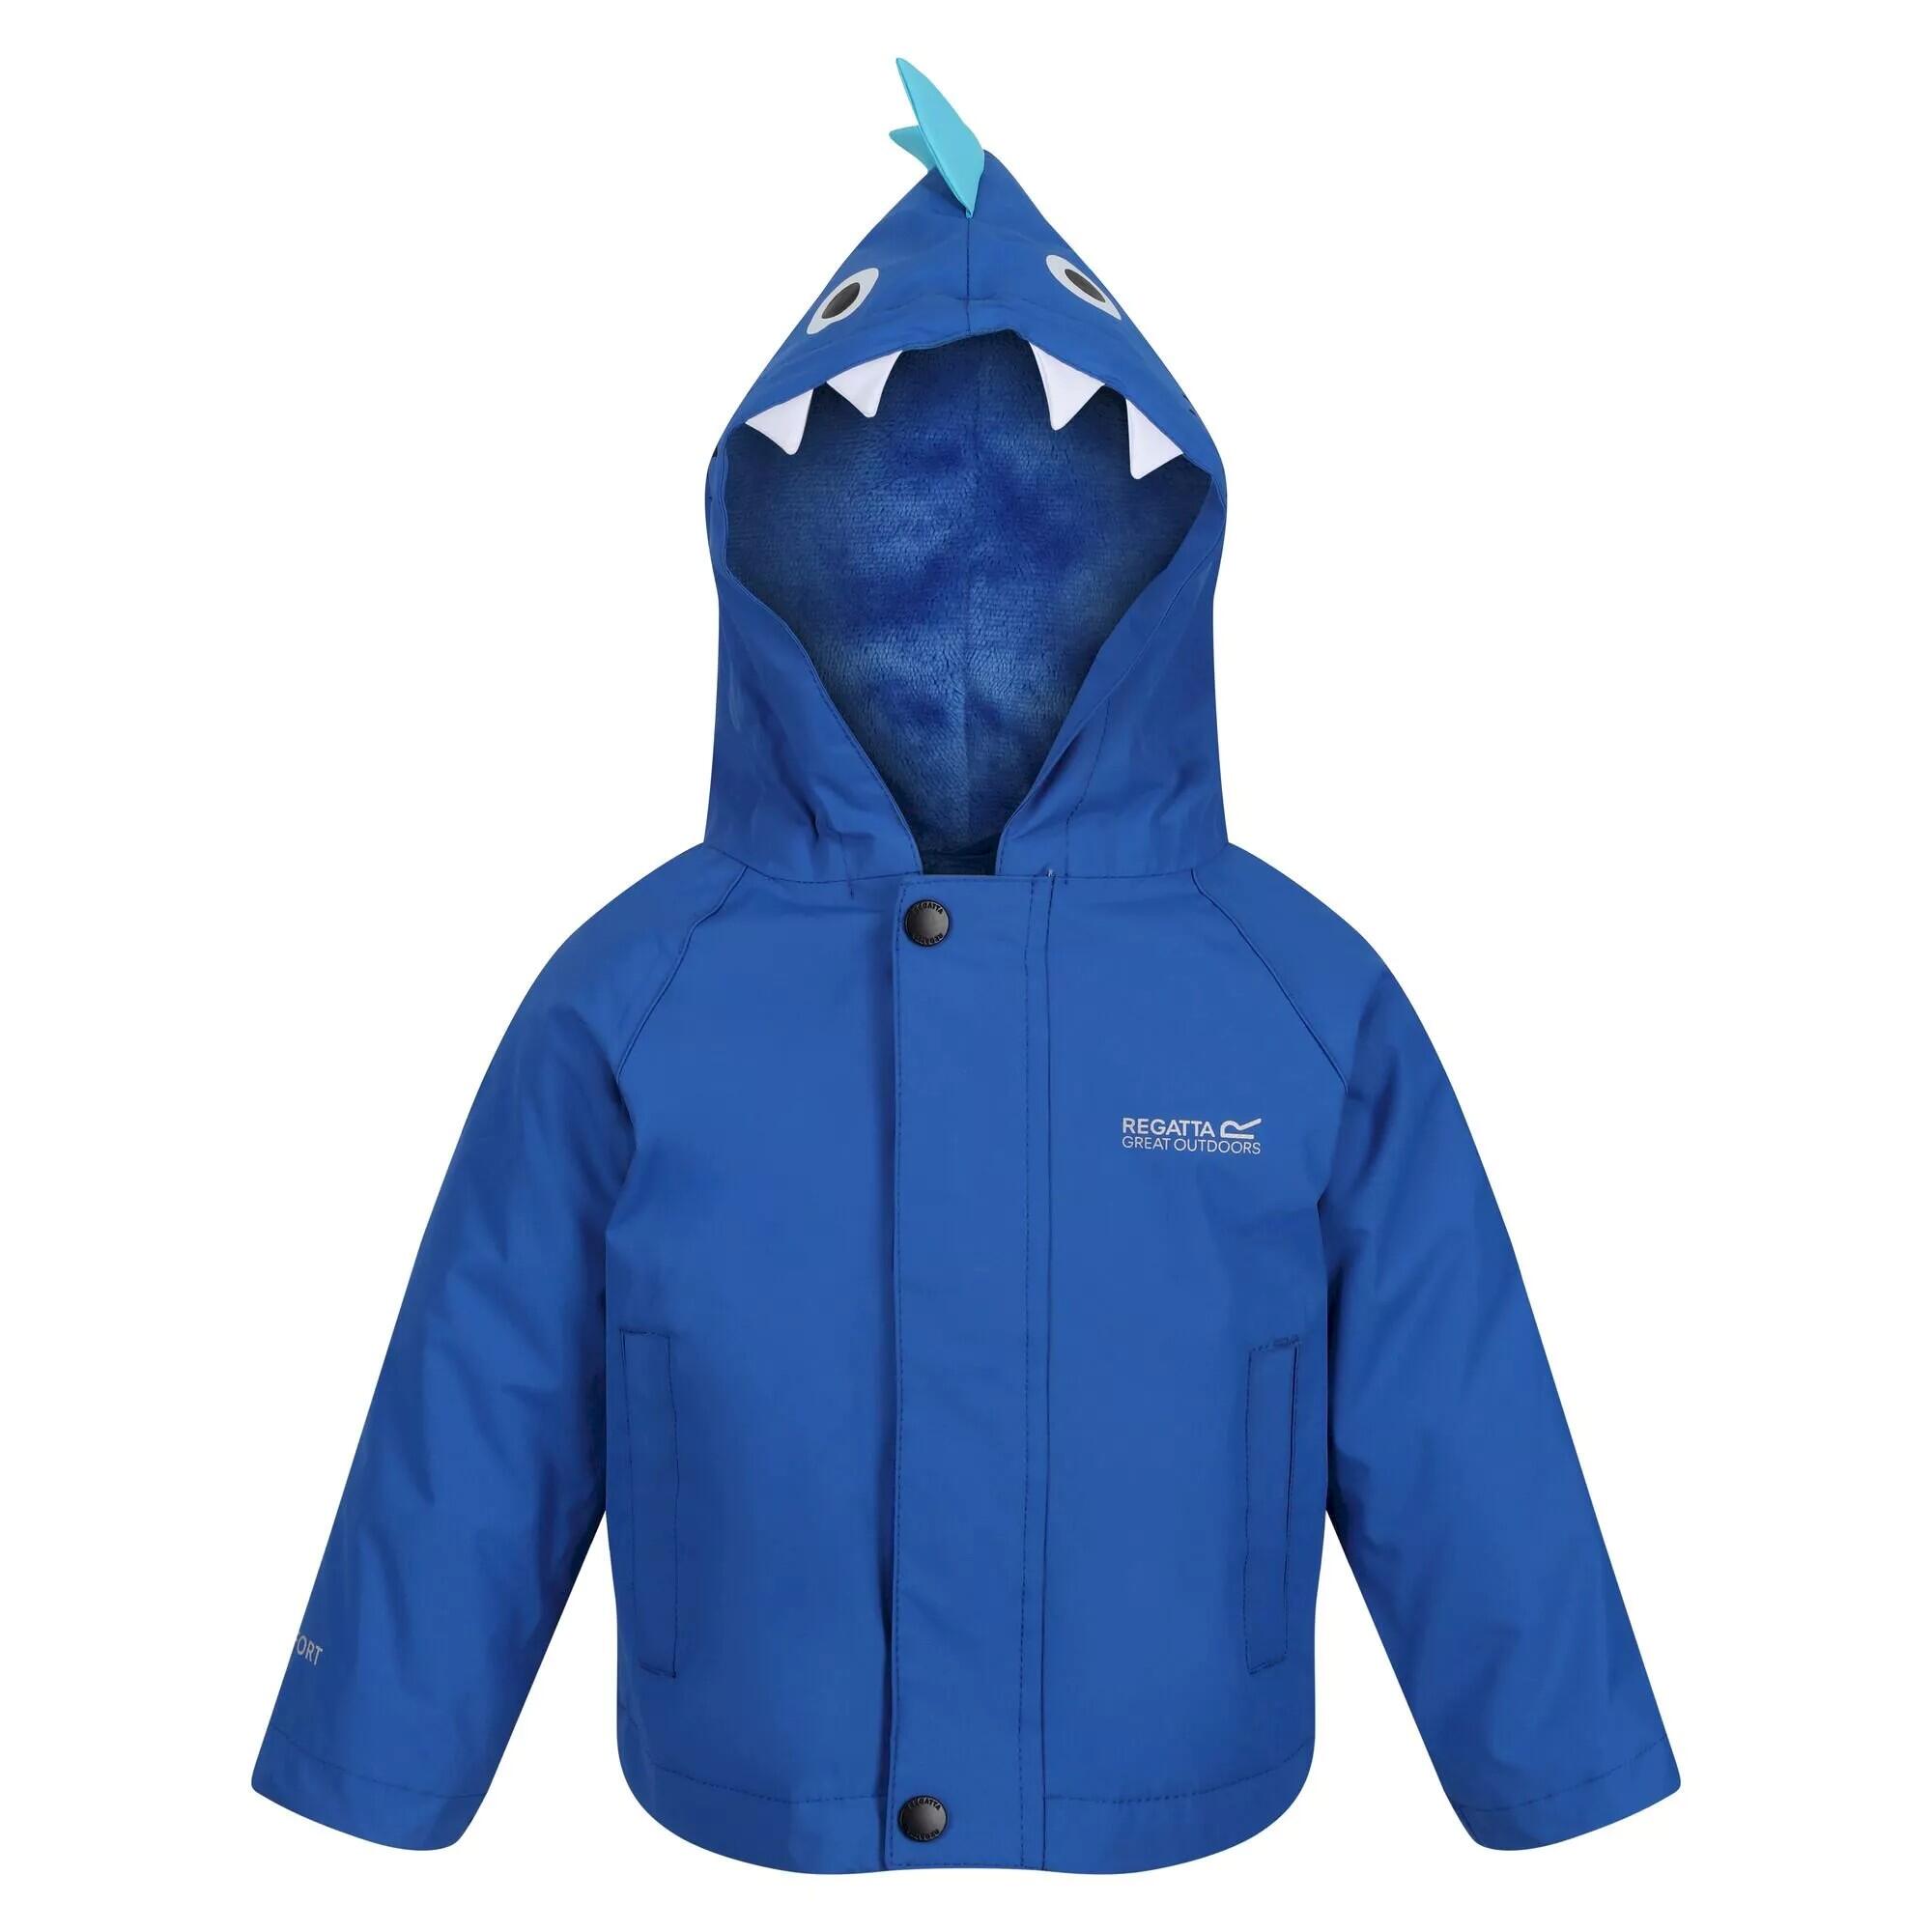 REGATTA Childrens/Kids Shark Waterproof Jacket (Nautical Blue)